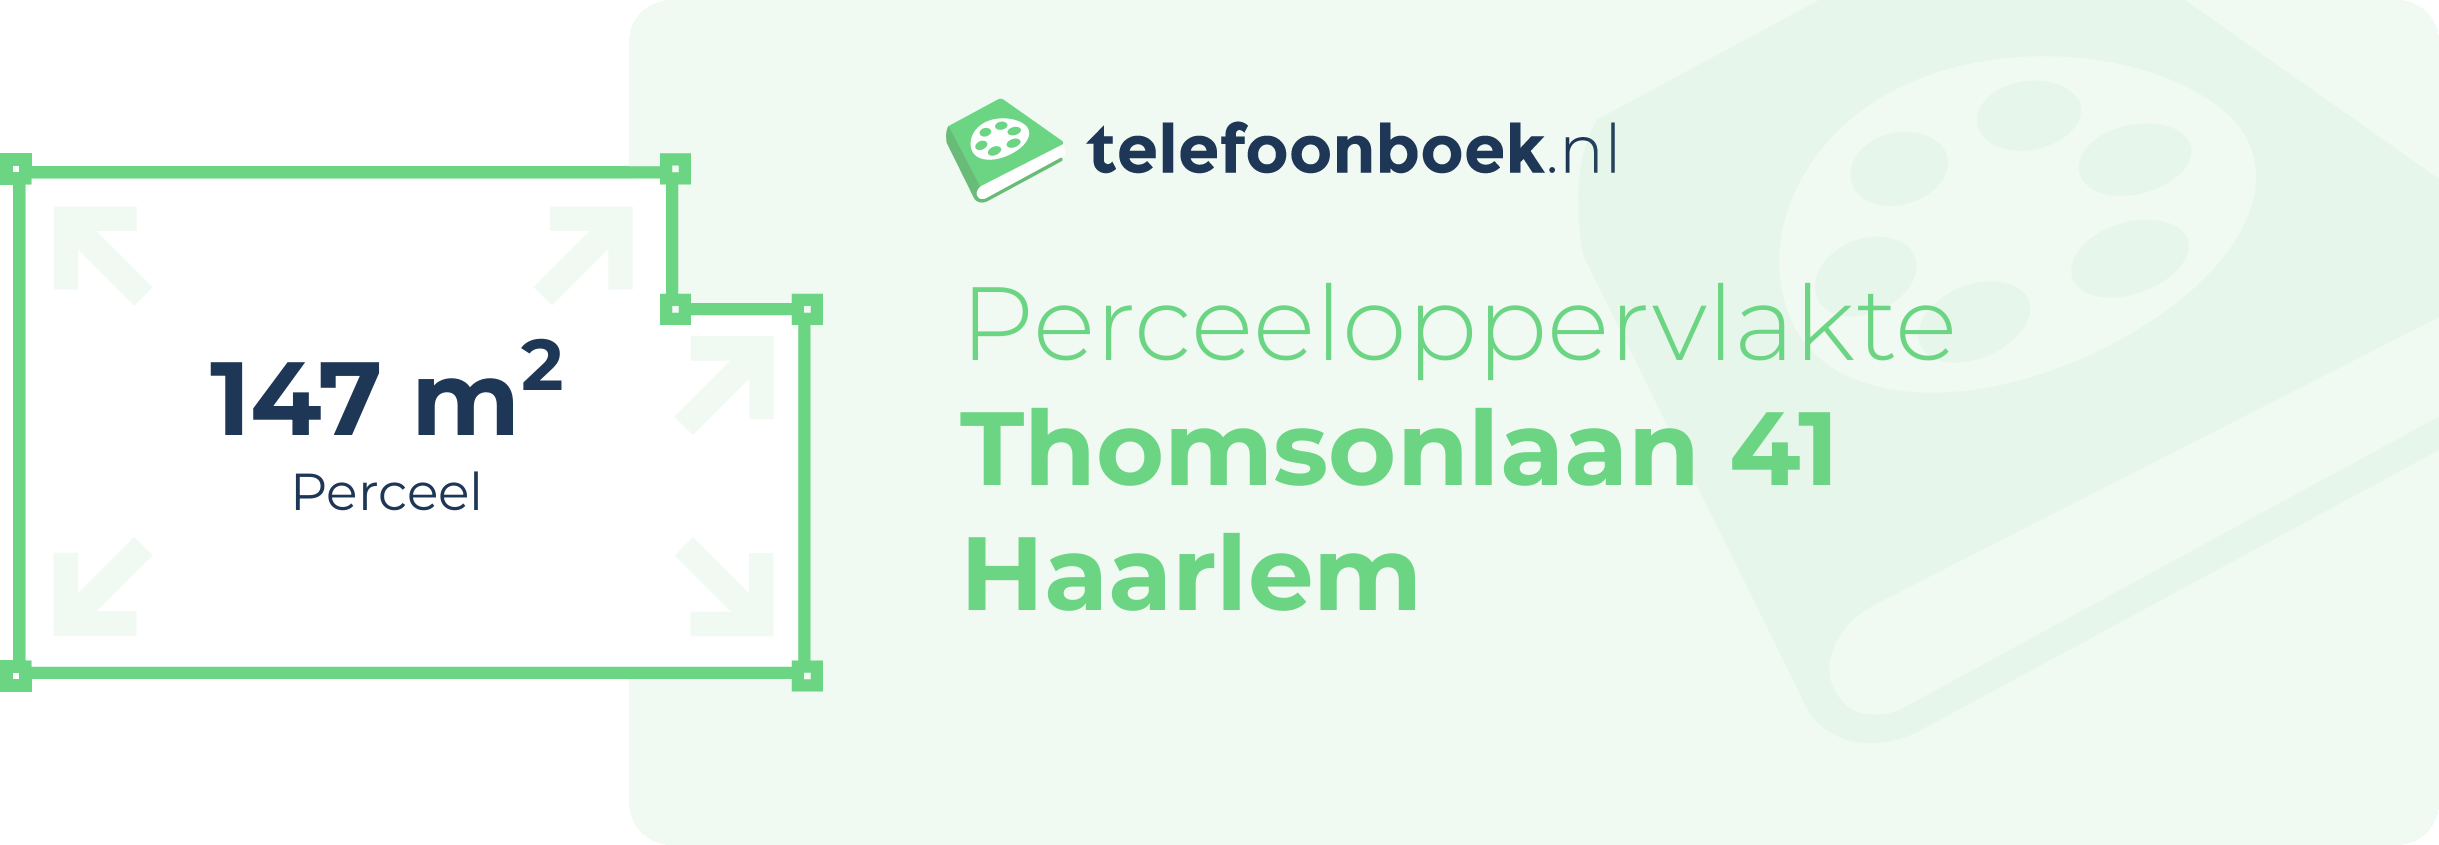 Perceeloppervlakte Thomsonlaan 41 Haarlem